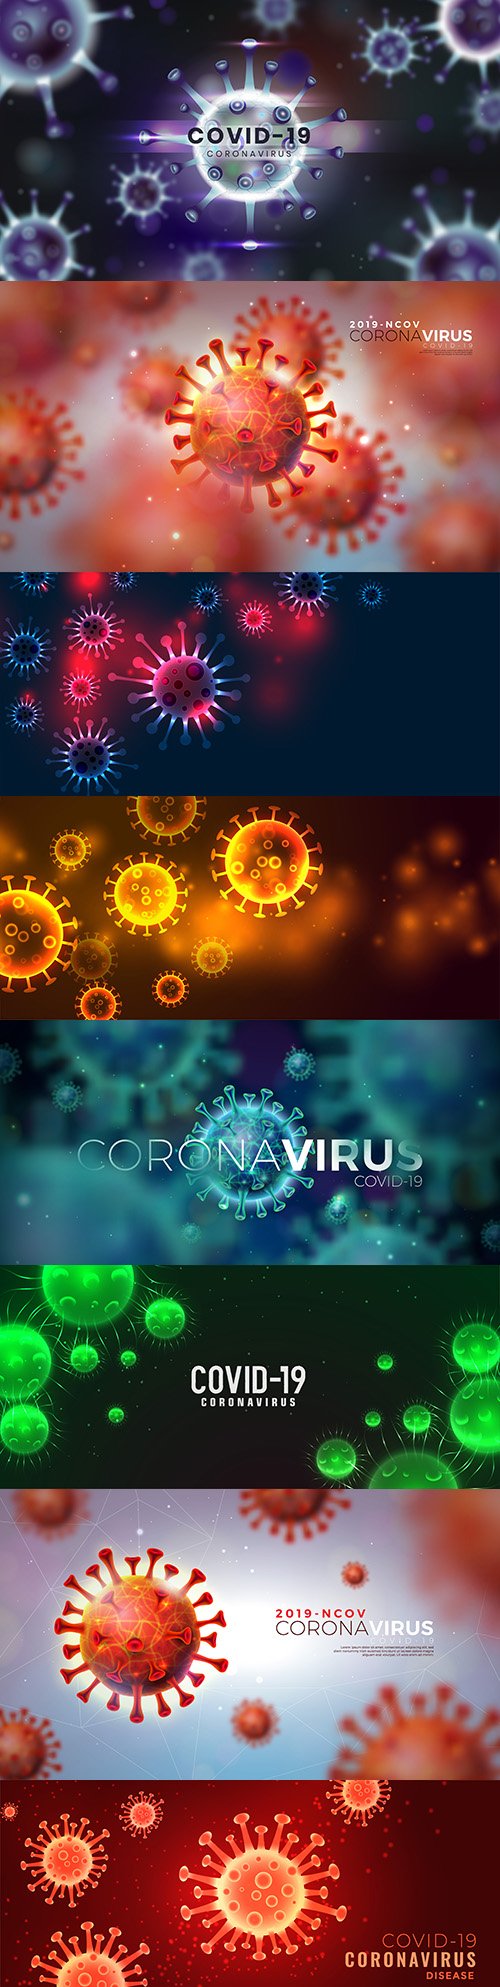 Covid-19 coronavirus flash design with virus cell background